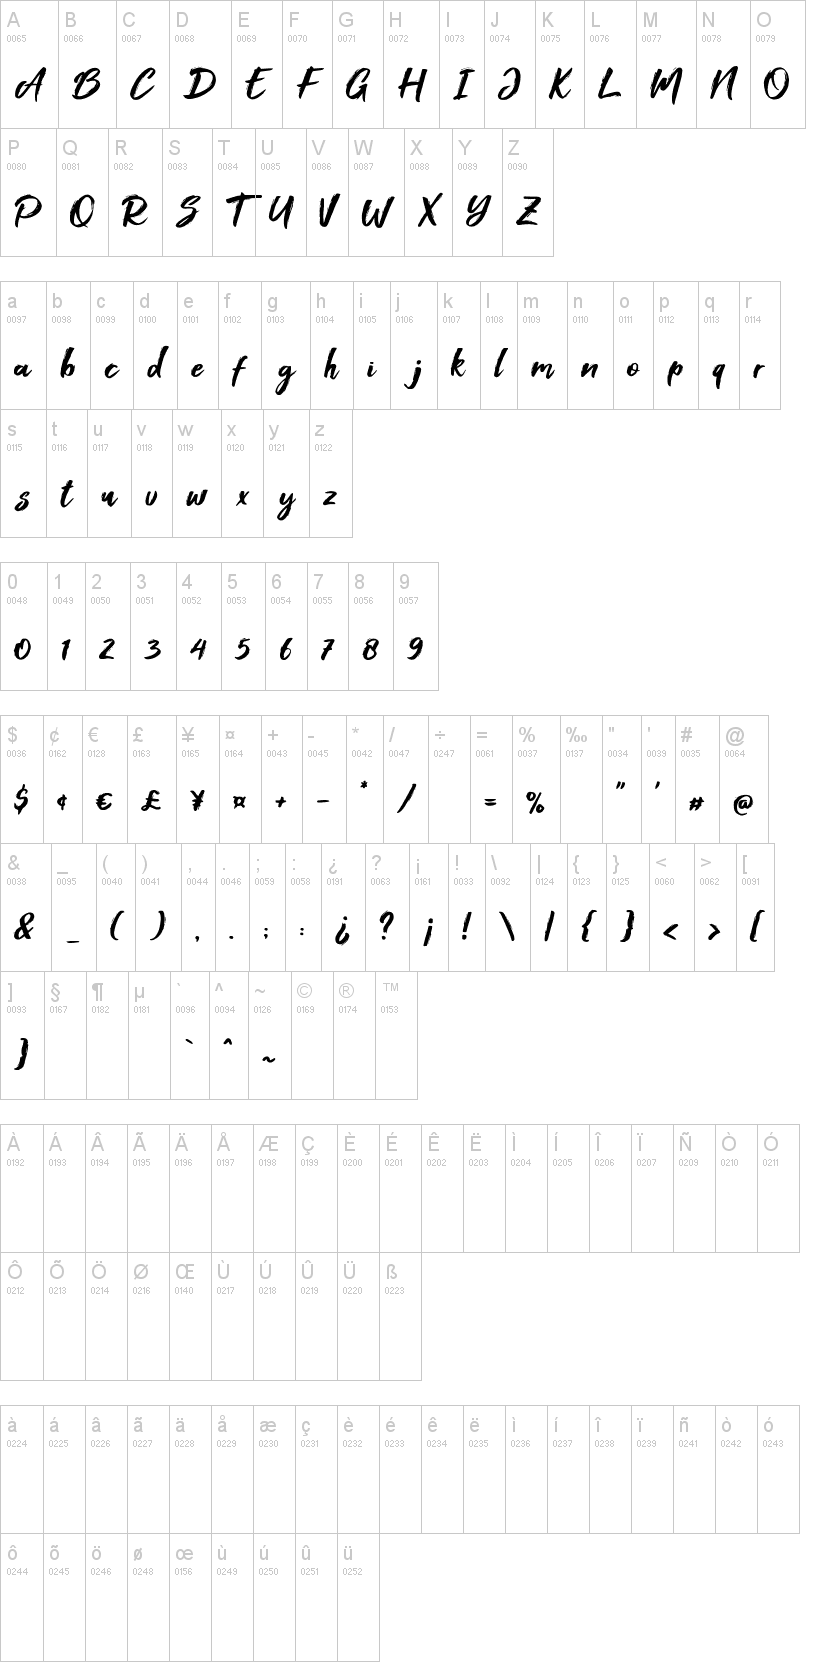 Foxlite Script